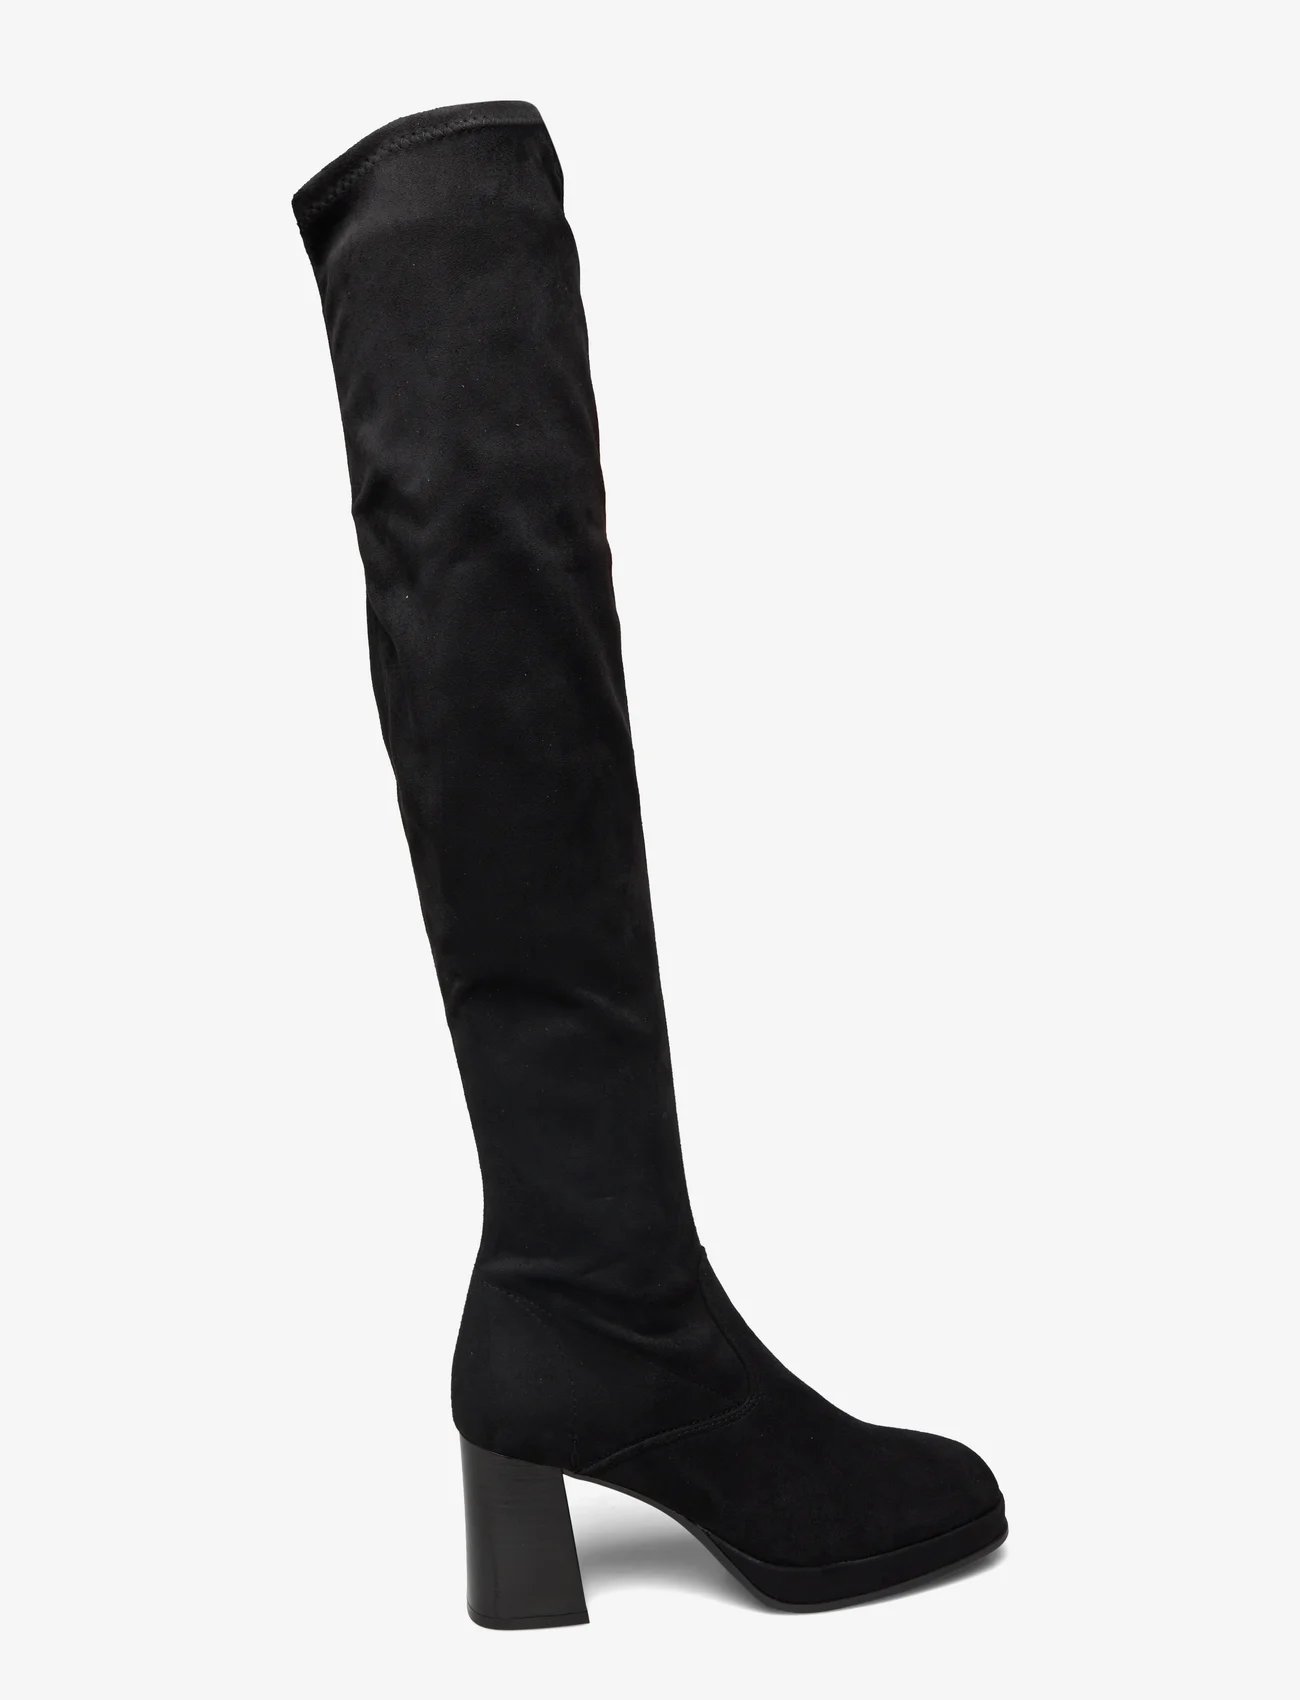 Tamaris - Woms Boots - lange stiefel - black - 1